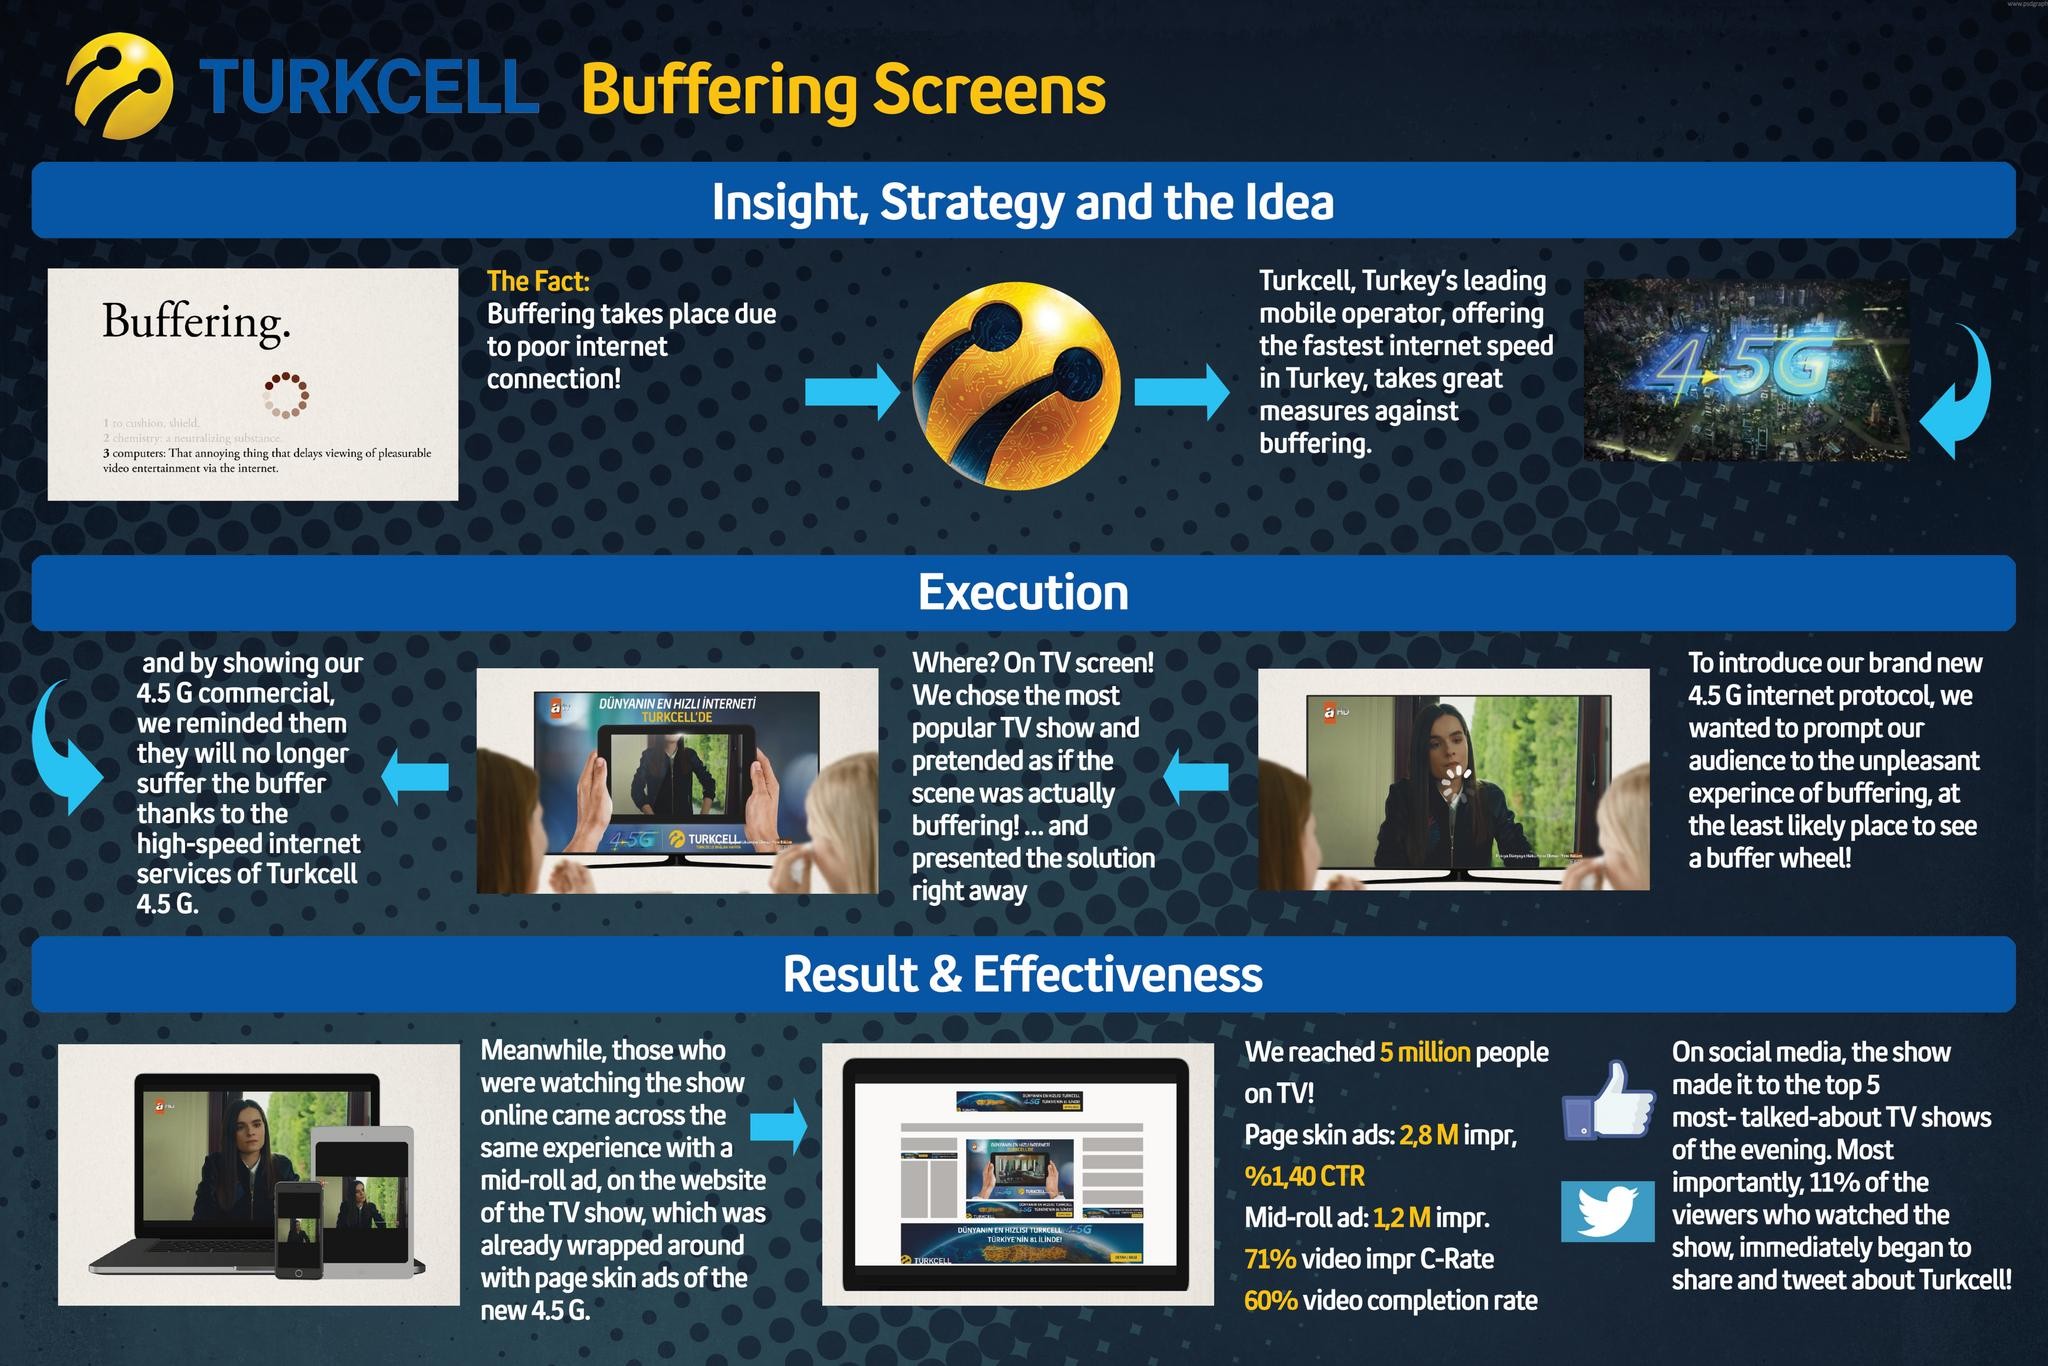 Turkcell Buffering Screens